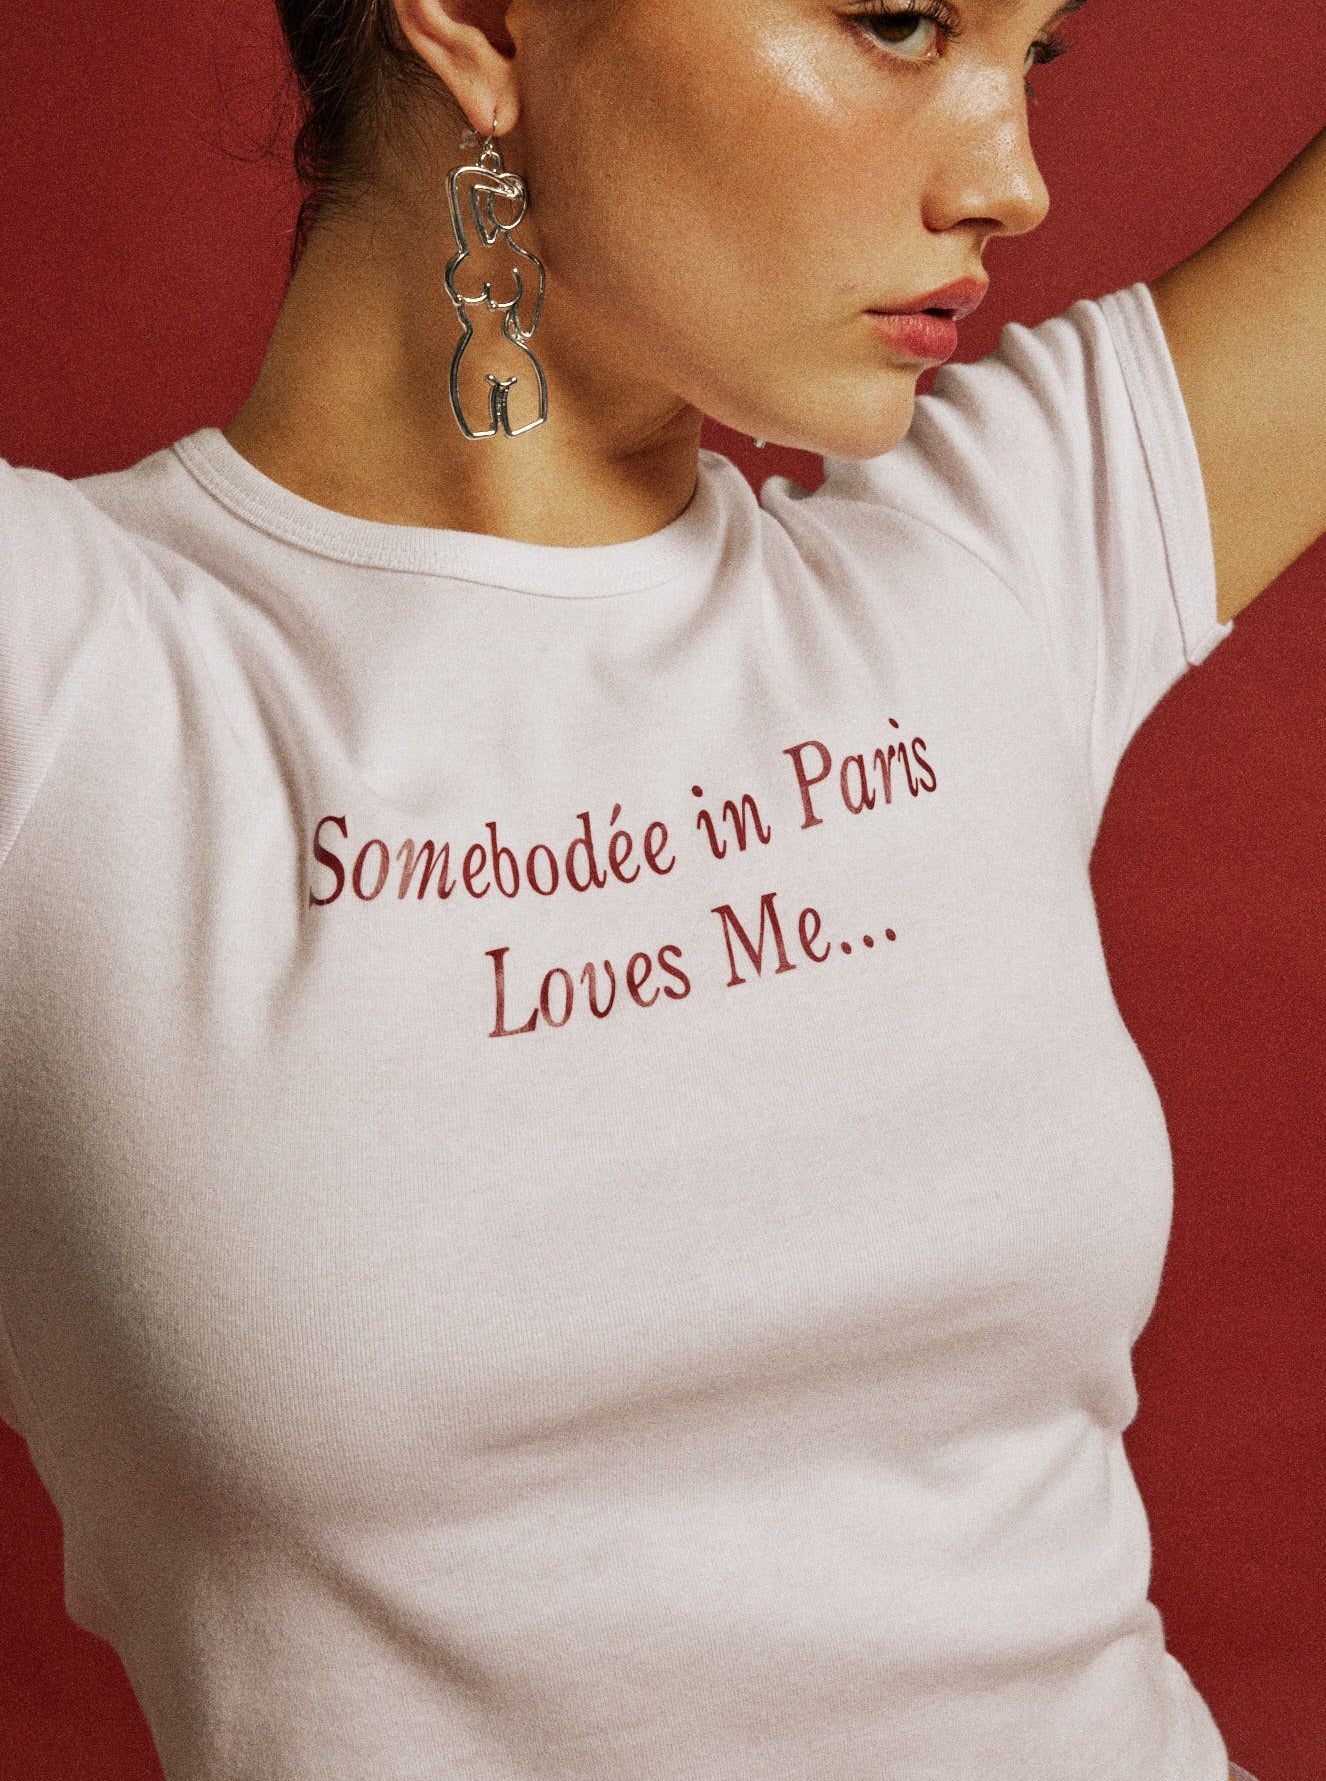 'Somebodée in Paris Loves Me' T-Shirt